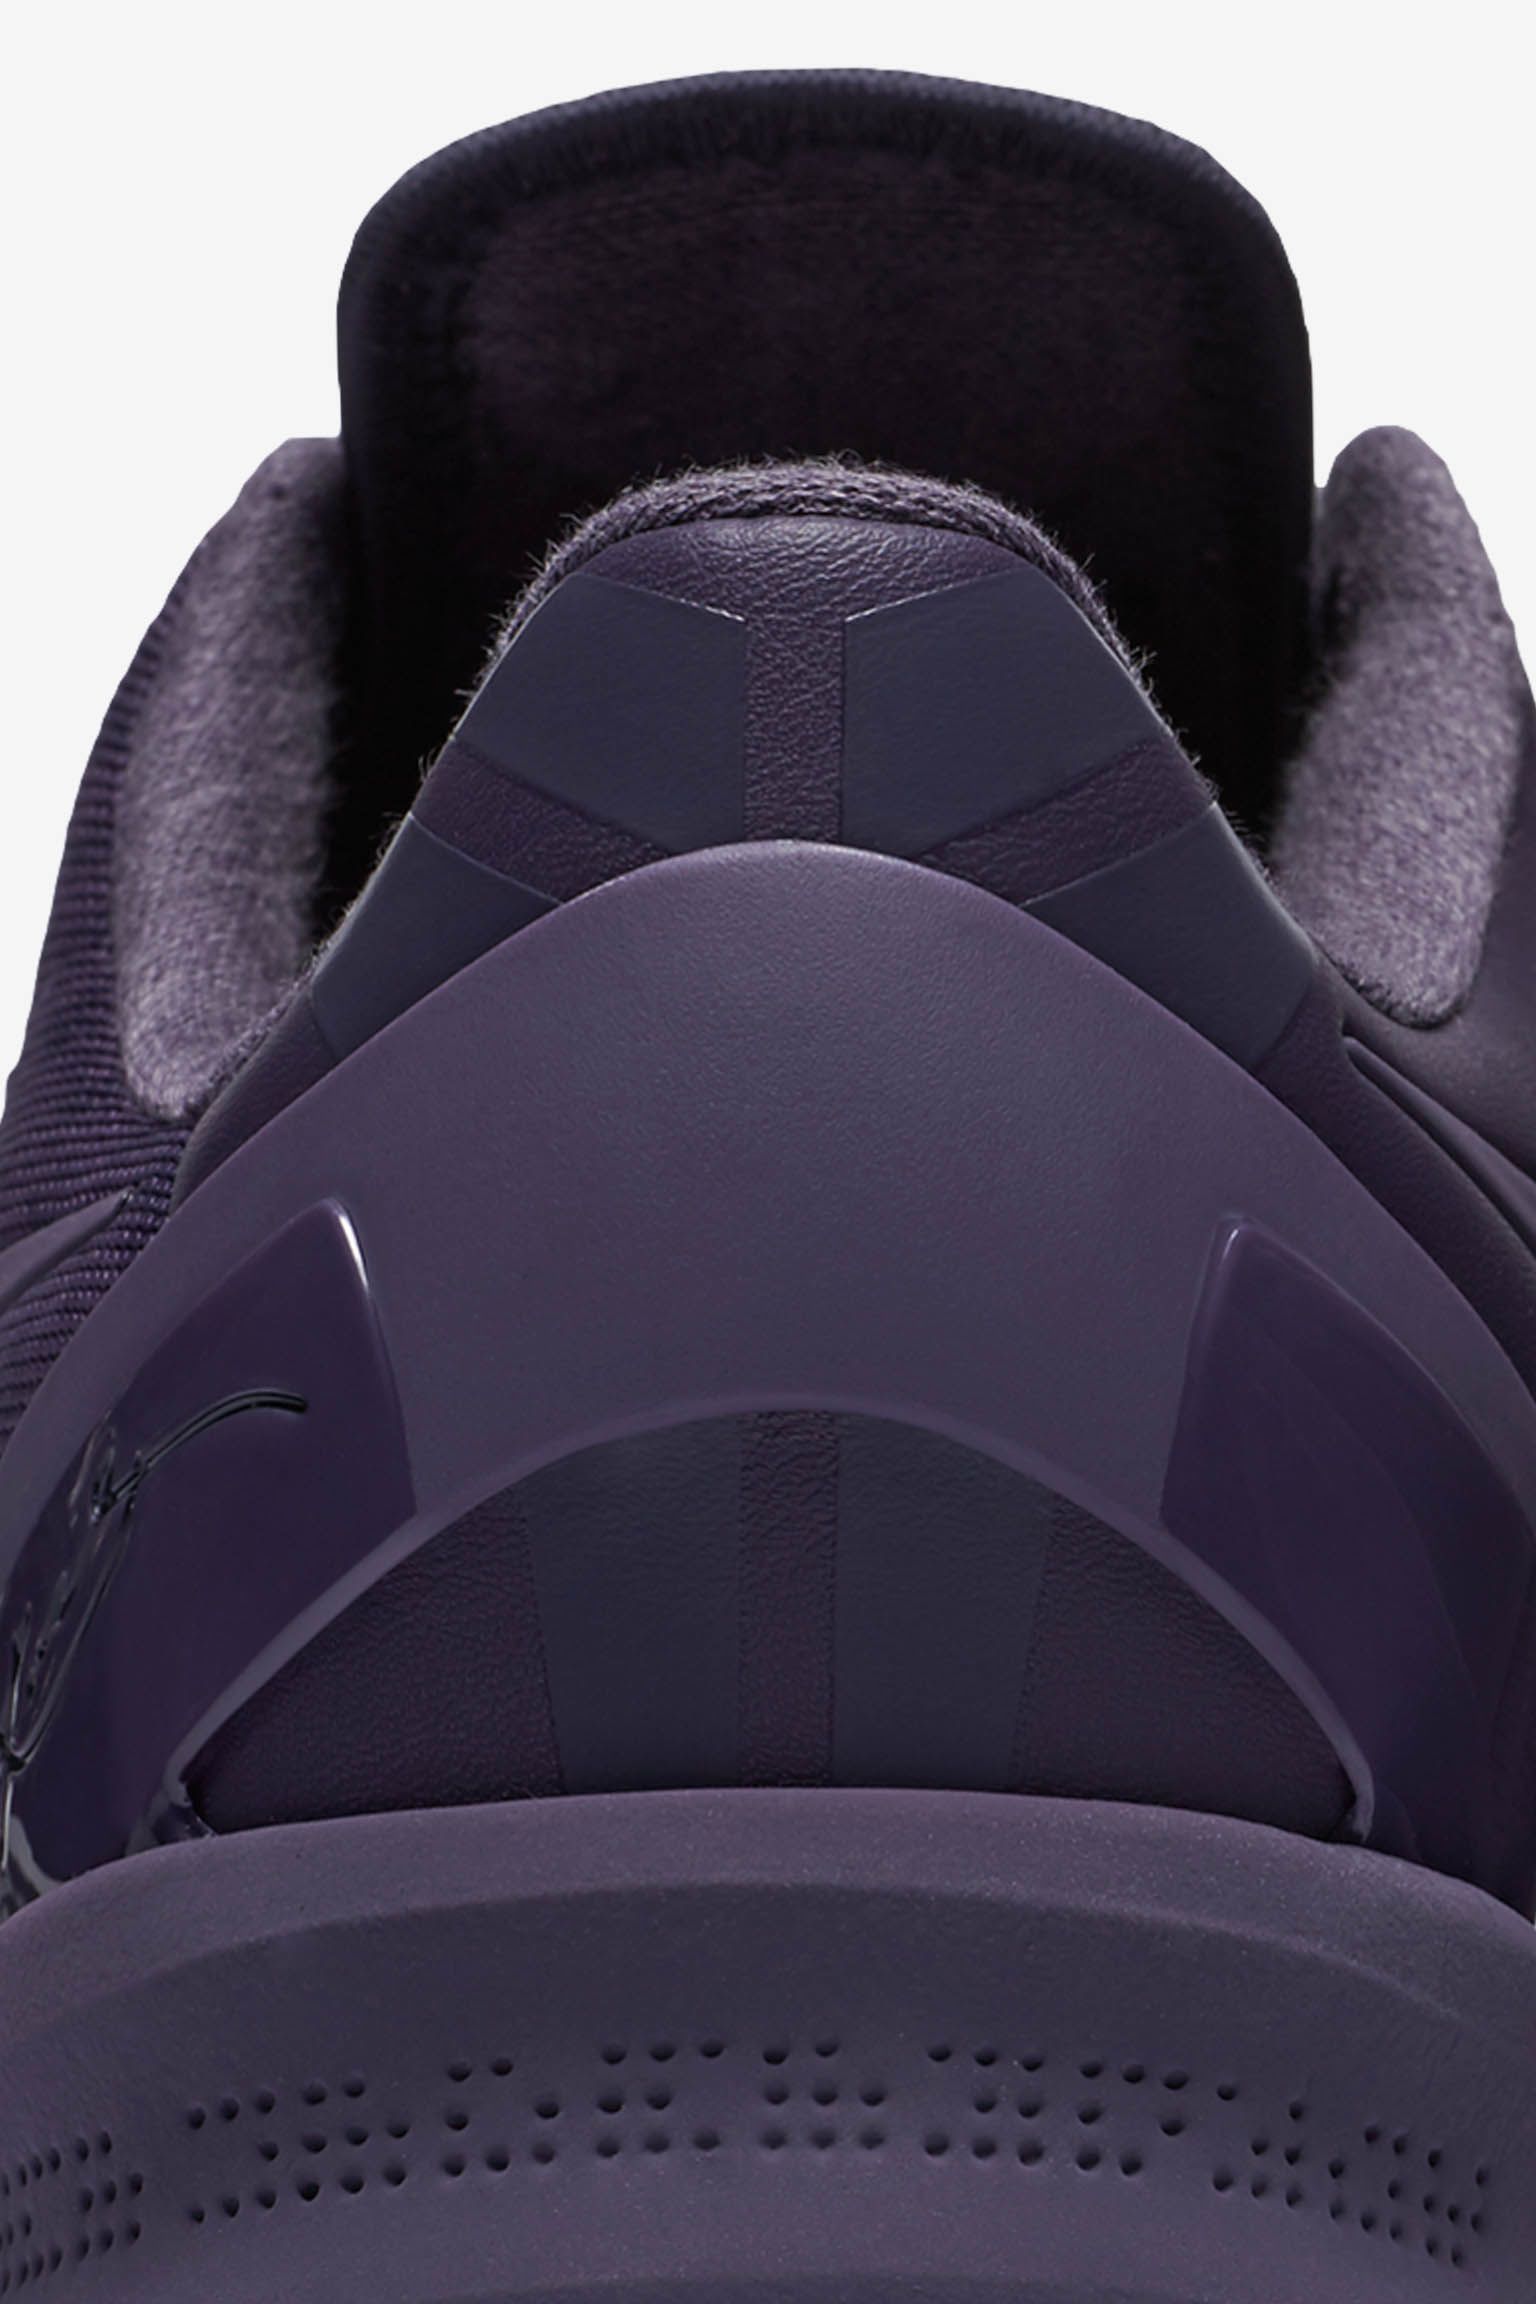 Erradicar Londres depositar Fecha de lanzamiento de las Nike Kobe 8 'FTB'. Nike SNKRS ES